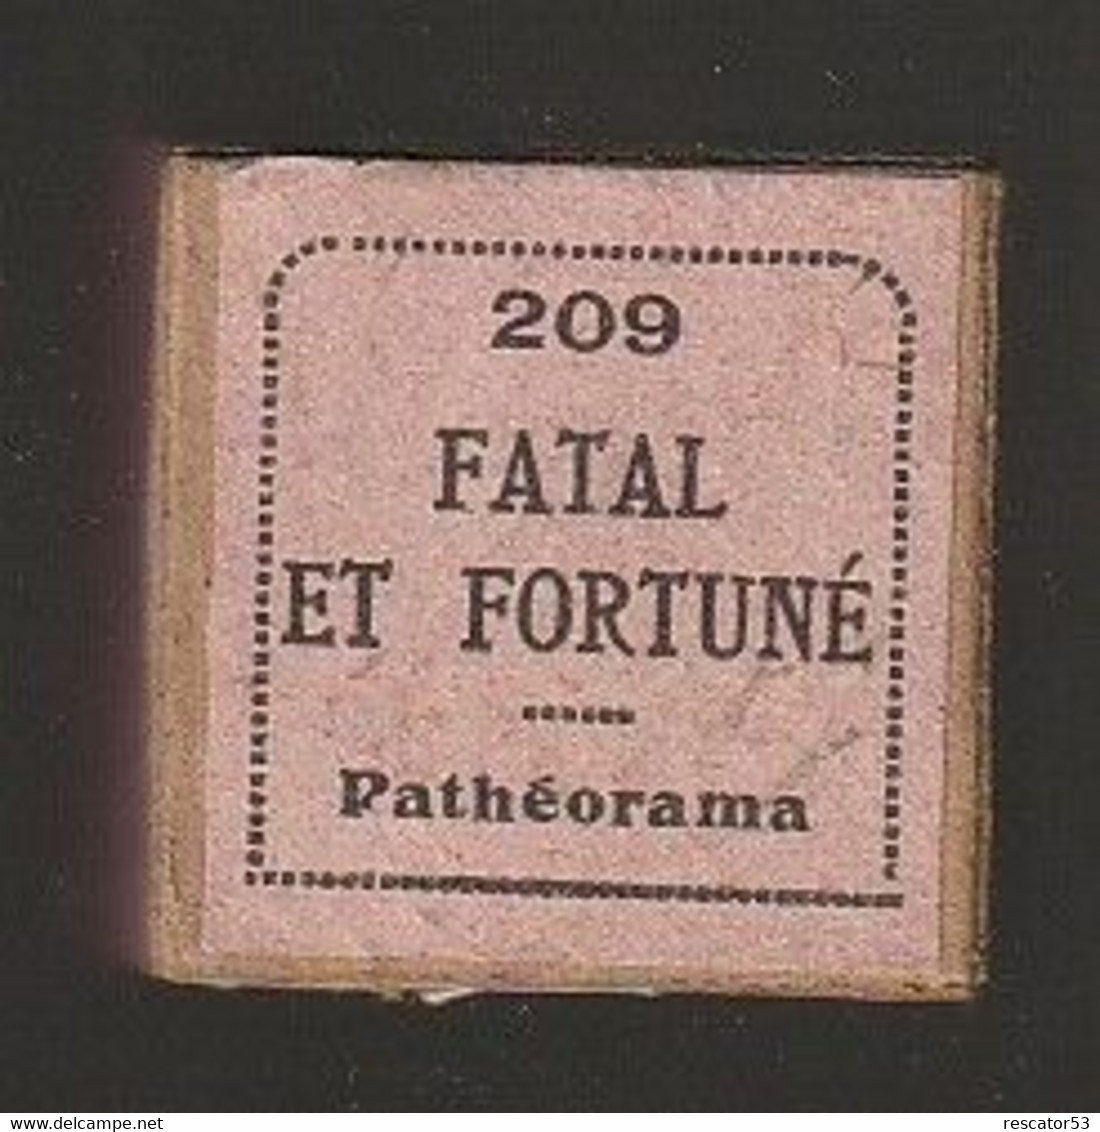 Film Fixe Pathéorama Années 20 Image Pellerin Epinal Fatal Et Fortune - 35mm -16mm - 9,5+8+S8mm Film Rolls